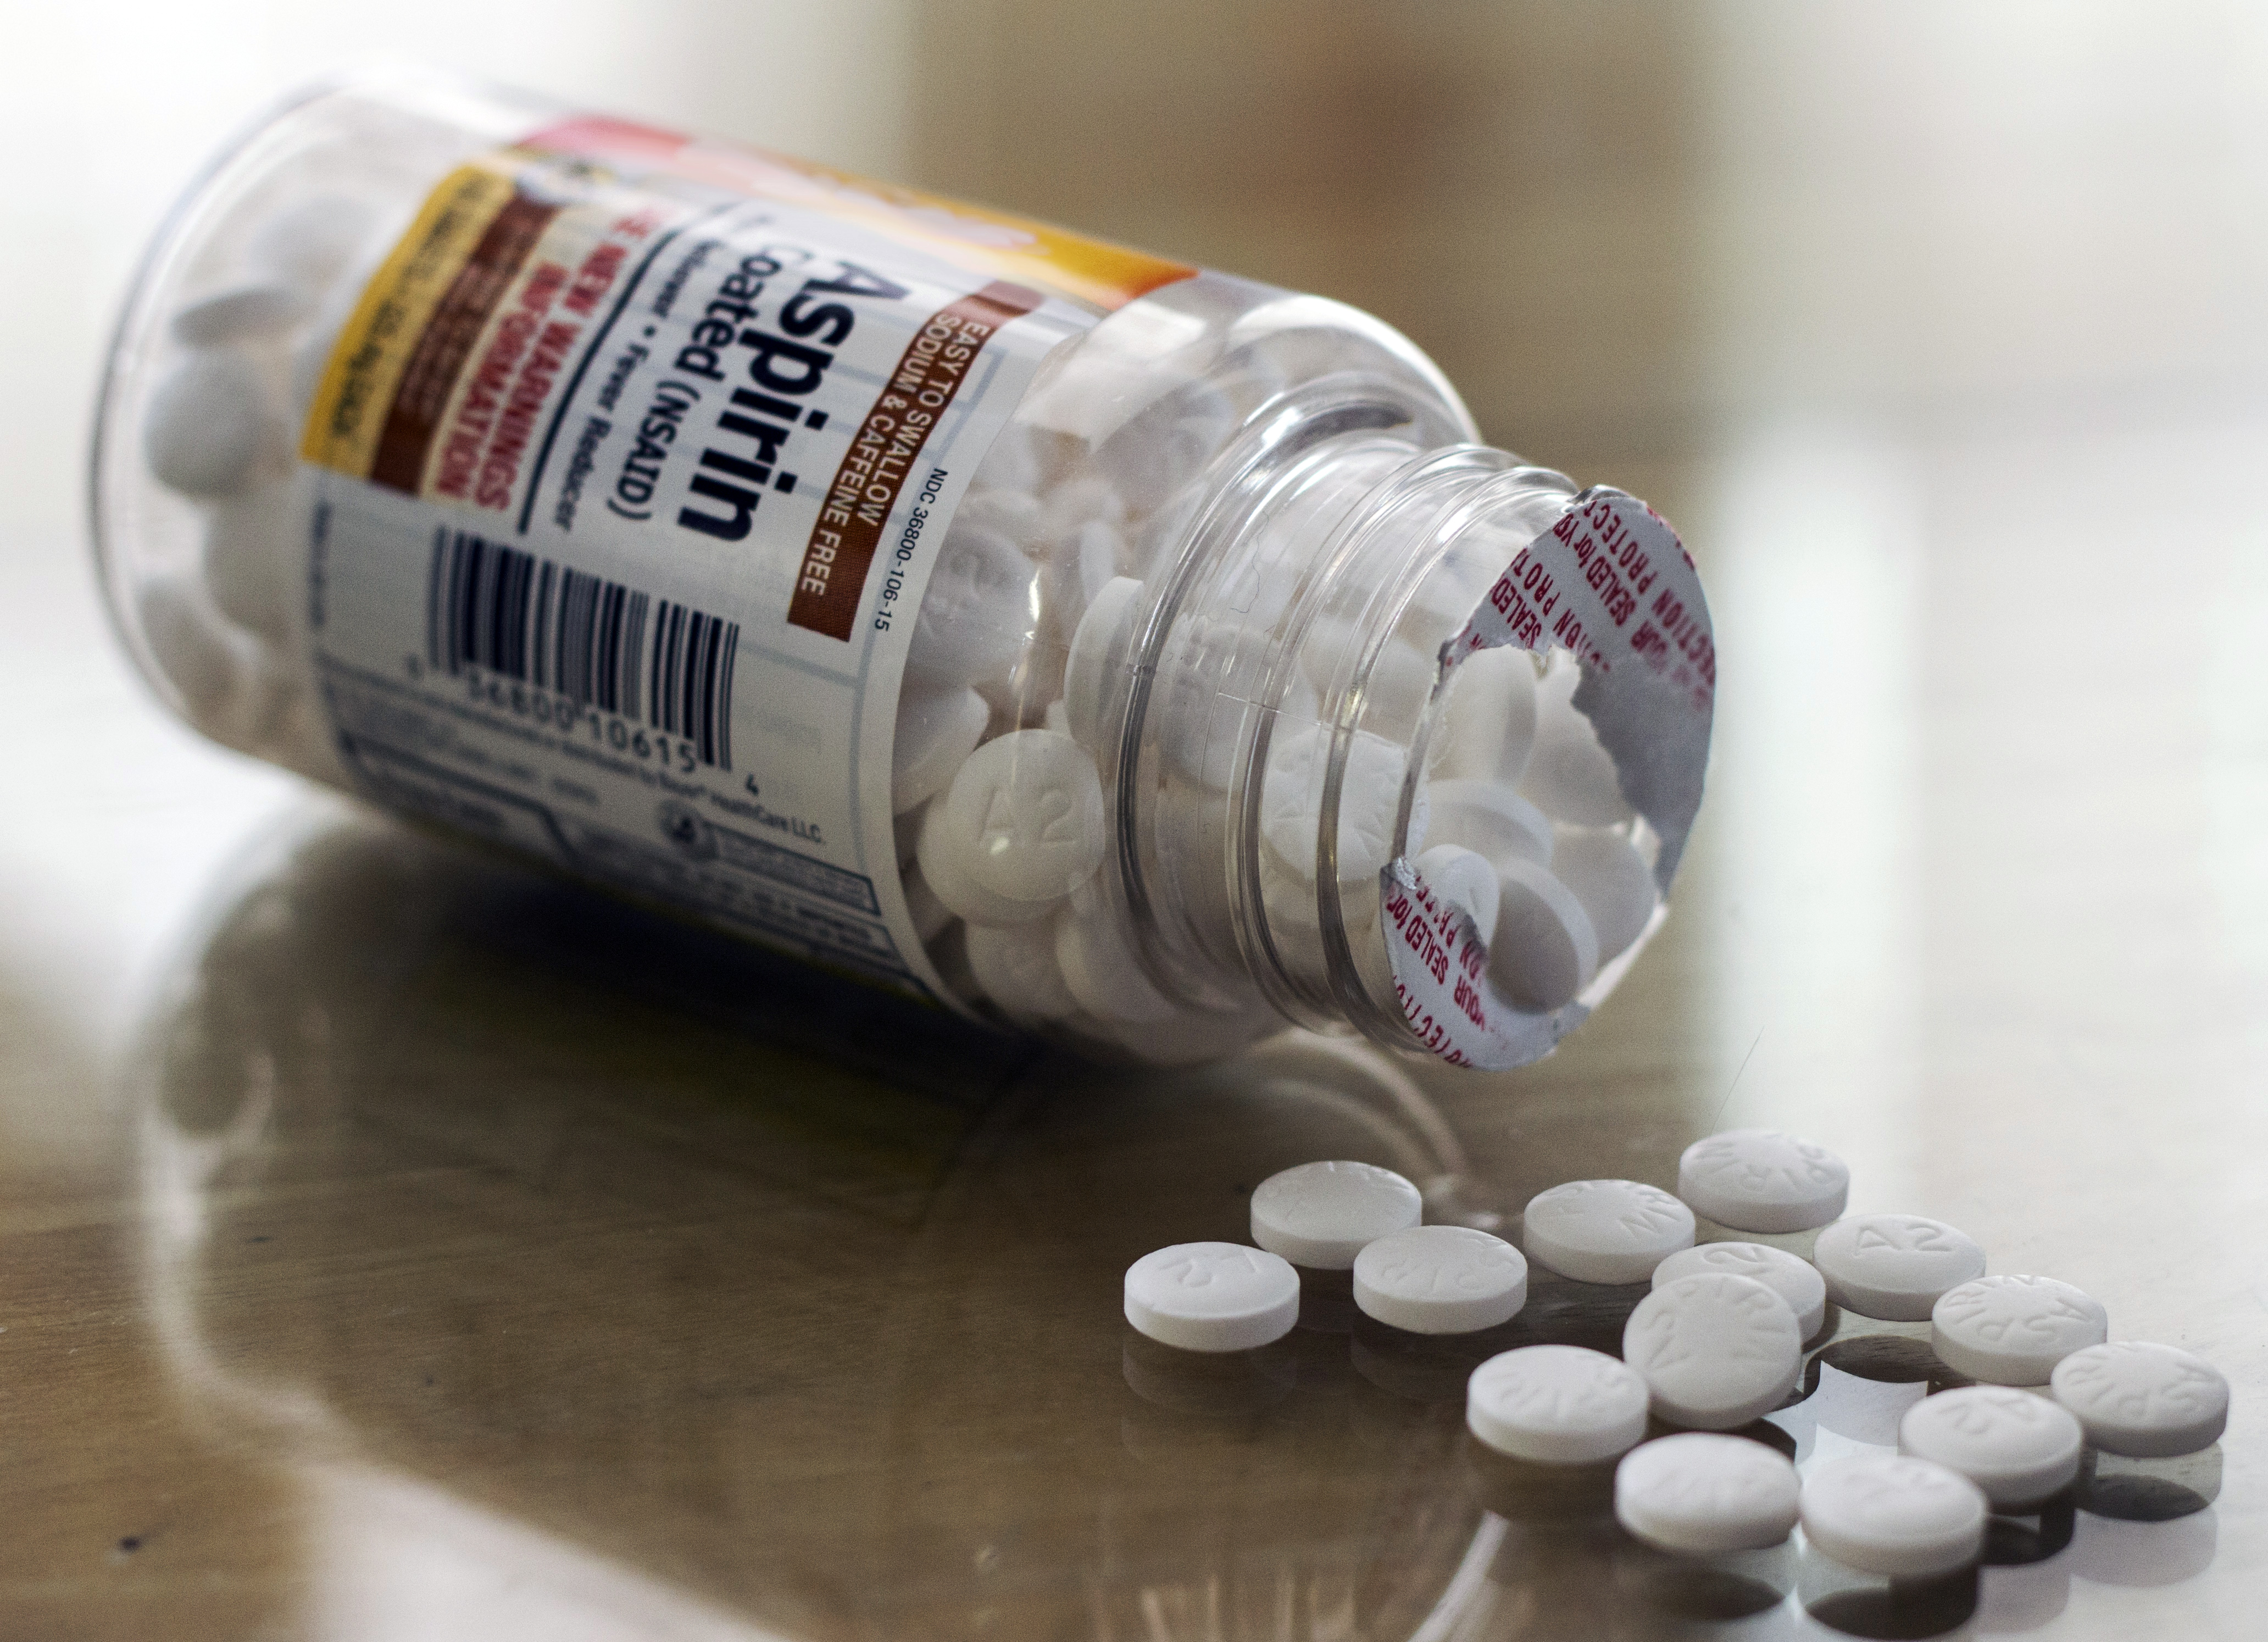 Newer blood thinner plus aspirin reduced stroke risk by 27